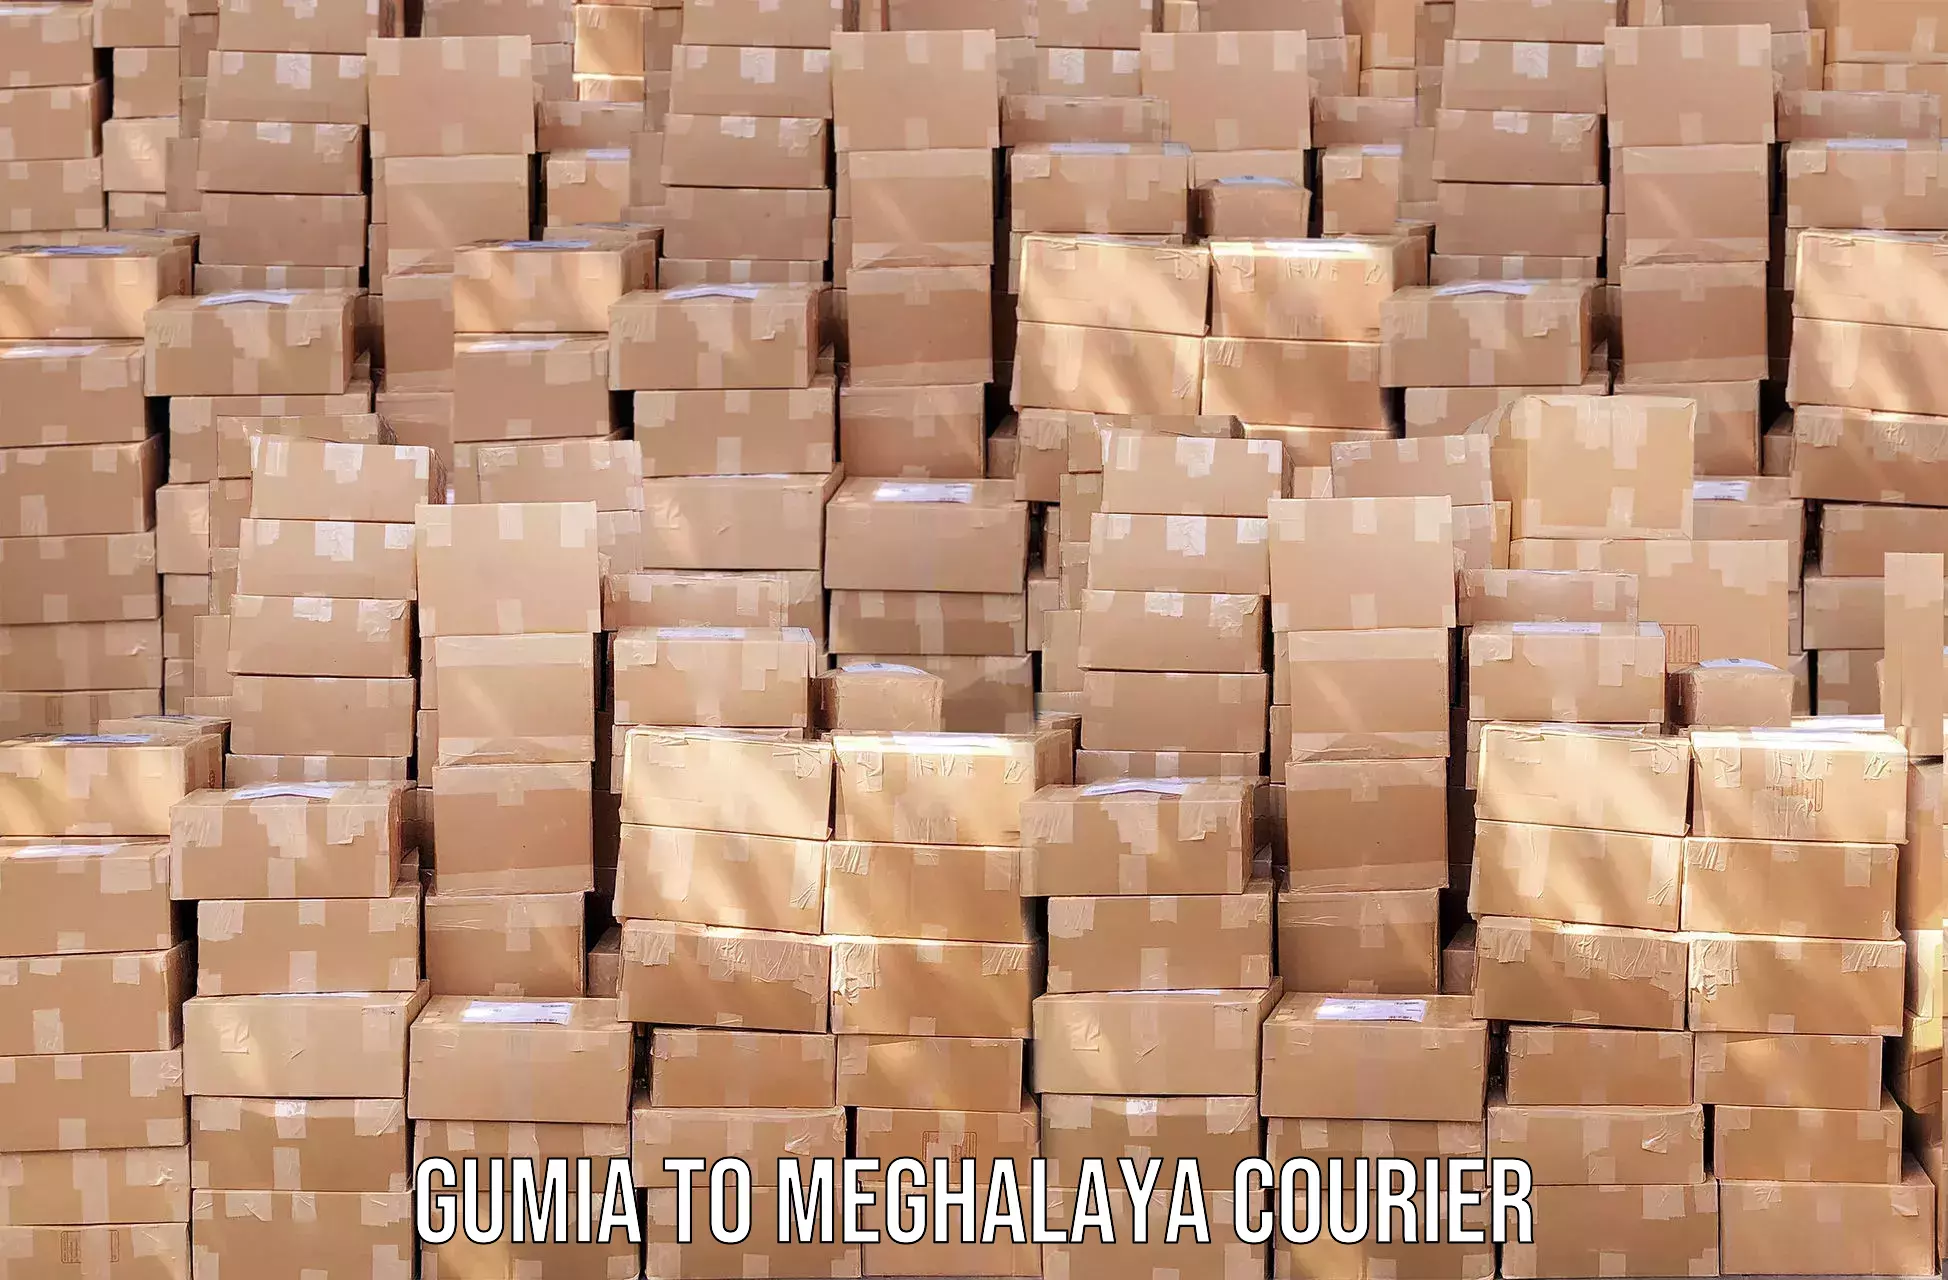 Advanced courier platforms Gumia to Meghalaya